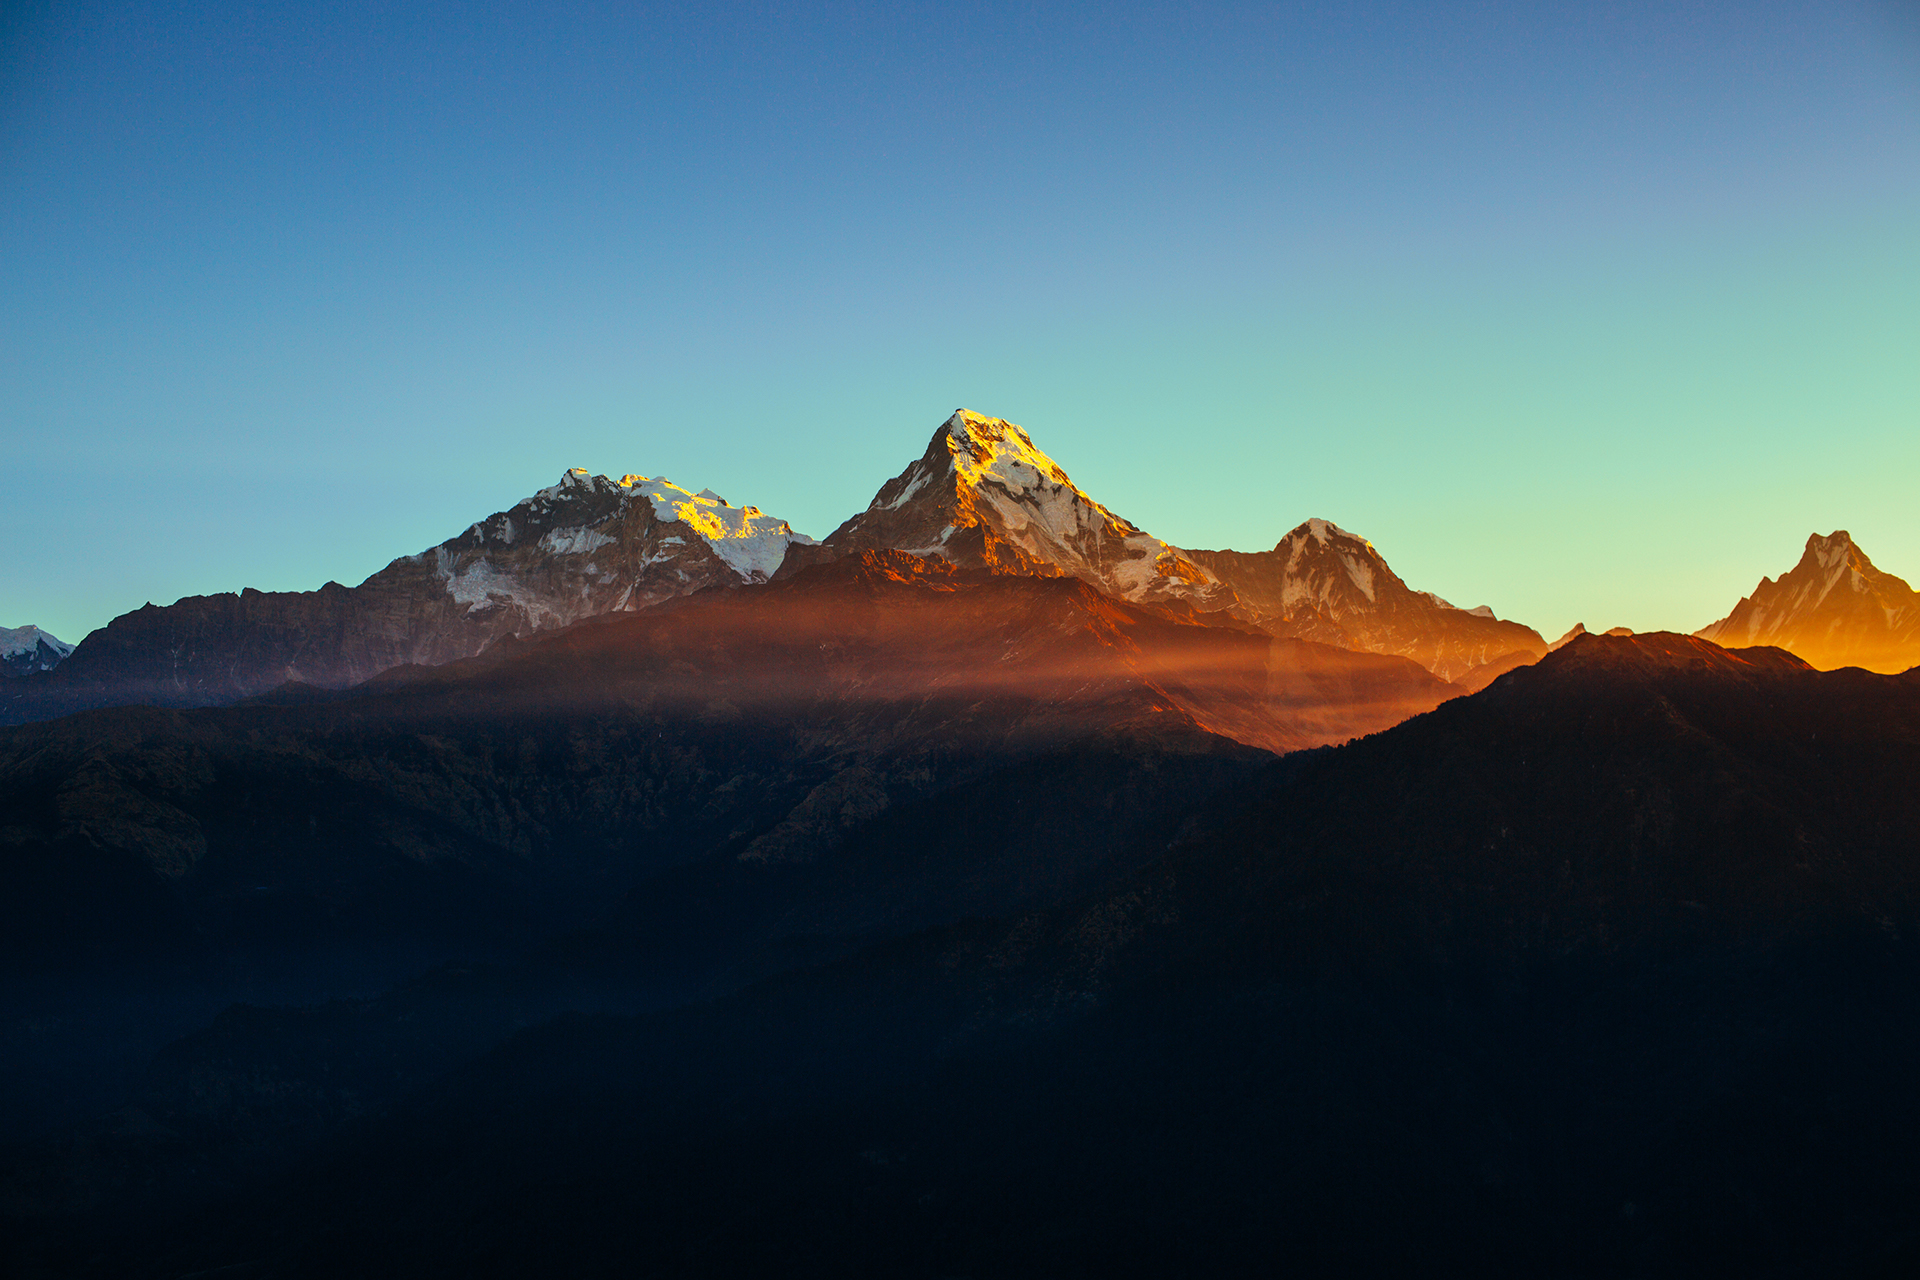 502299 descargar imagen tierra/naturaleza, montaña, nepal, montañas: fondos de pantalla y protectores de pantalla gratis